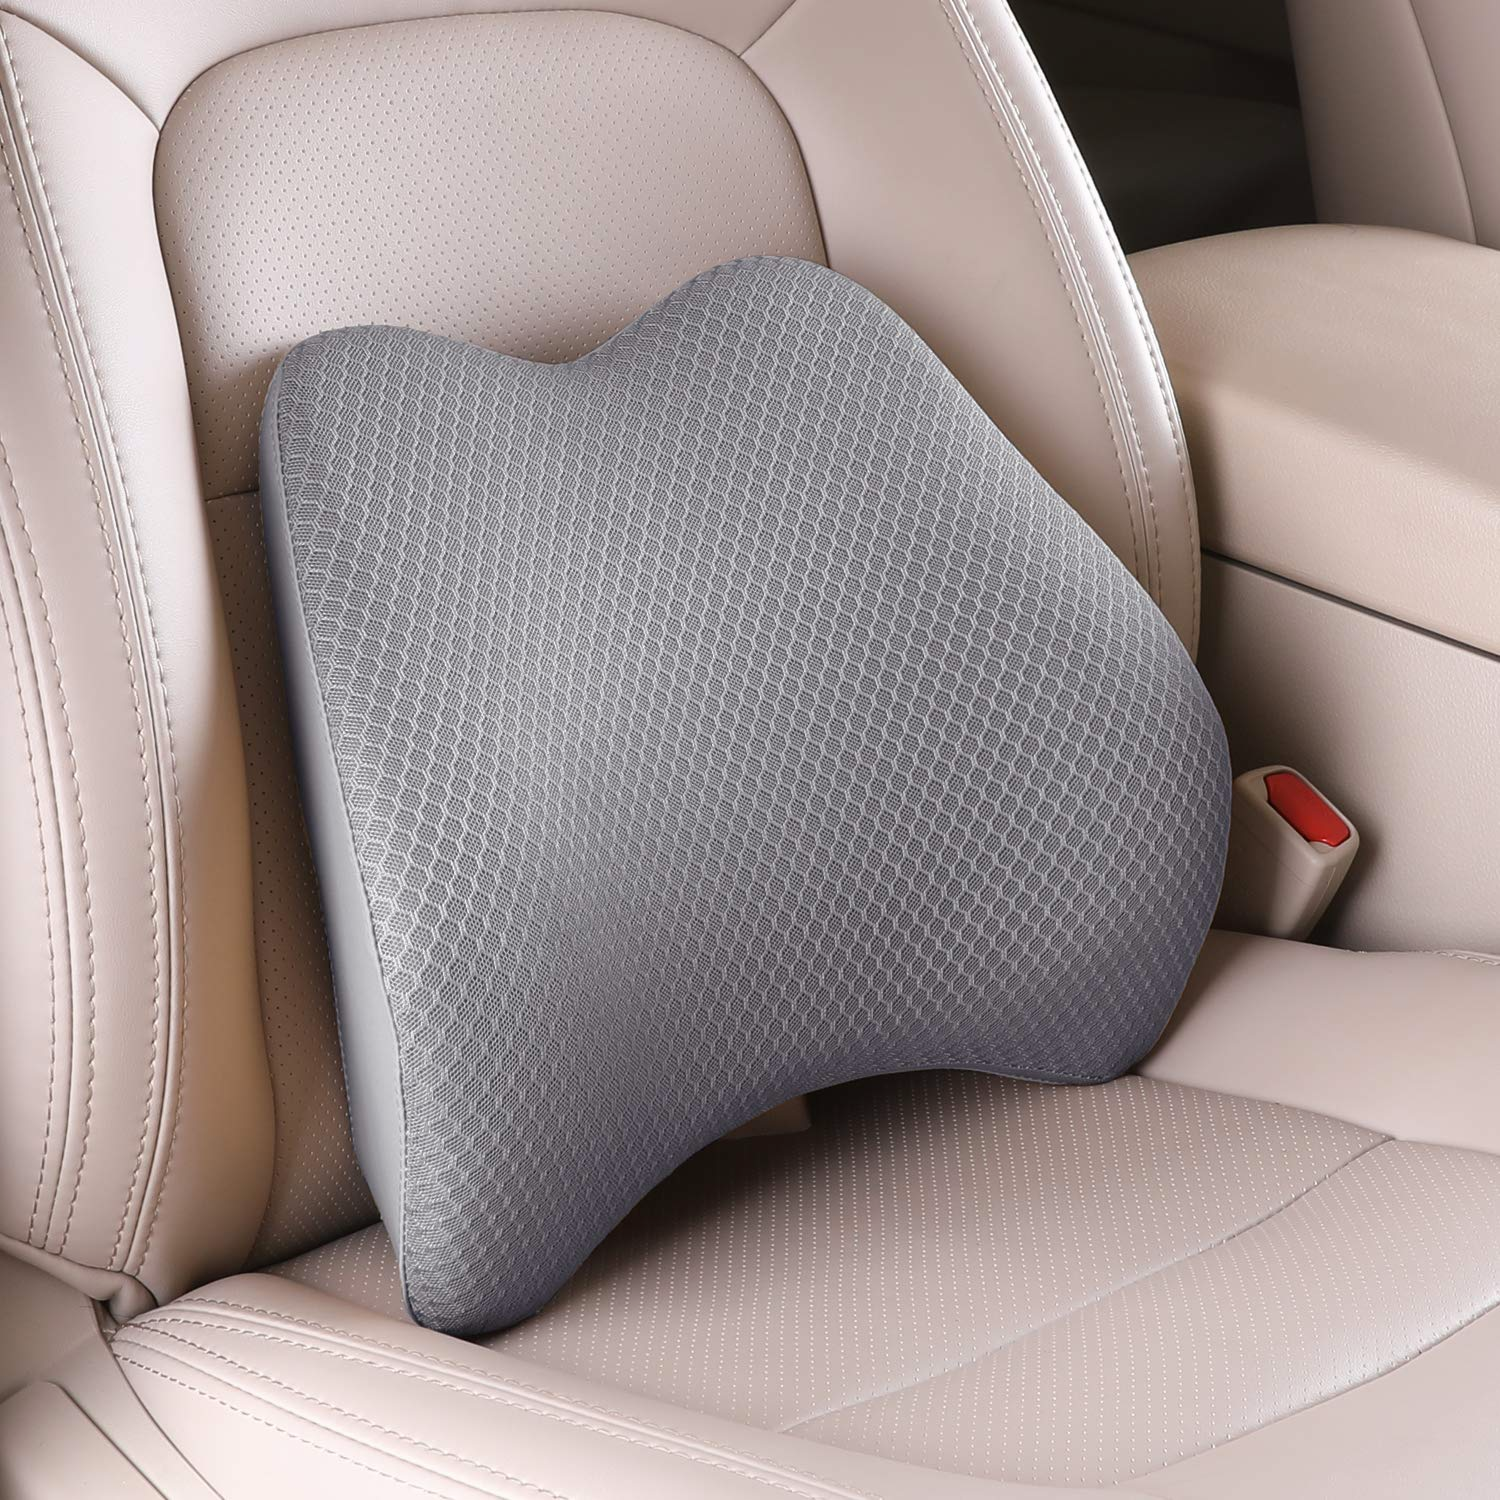 1 Pcs Car Memory Foam Lumbar Support Pillow Car Design Thin And